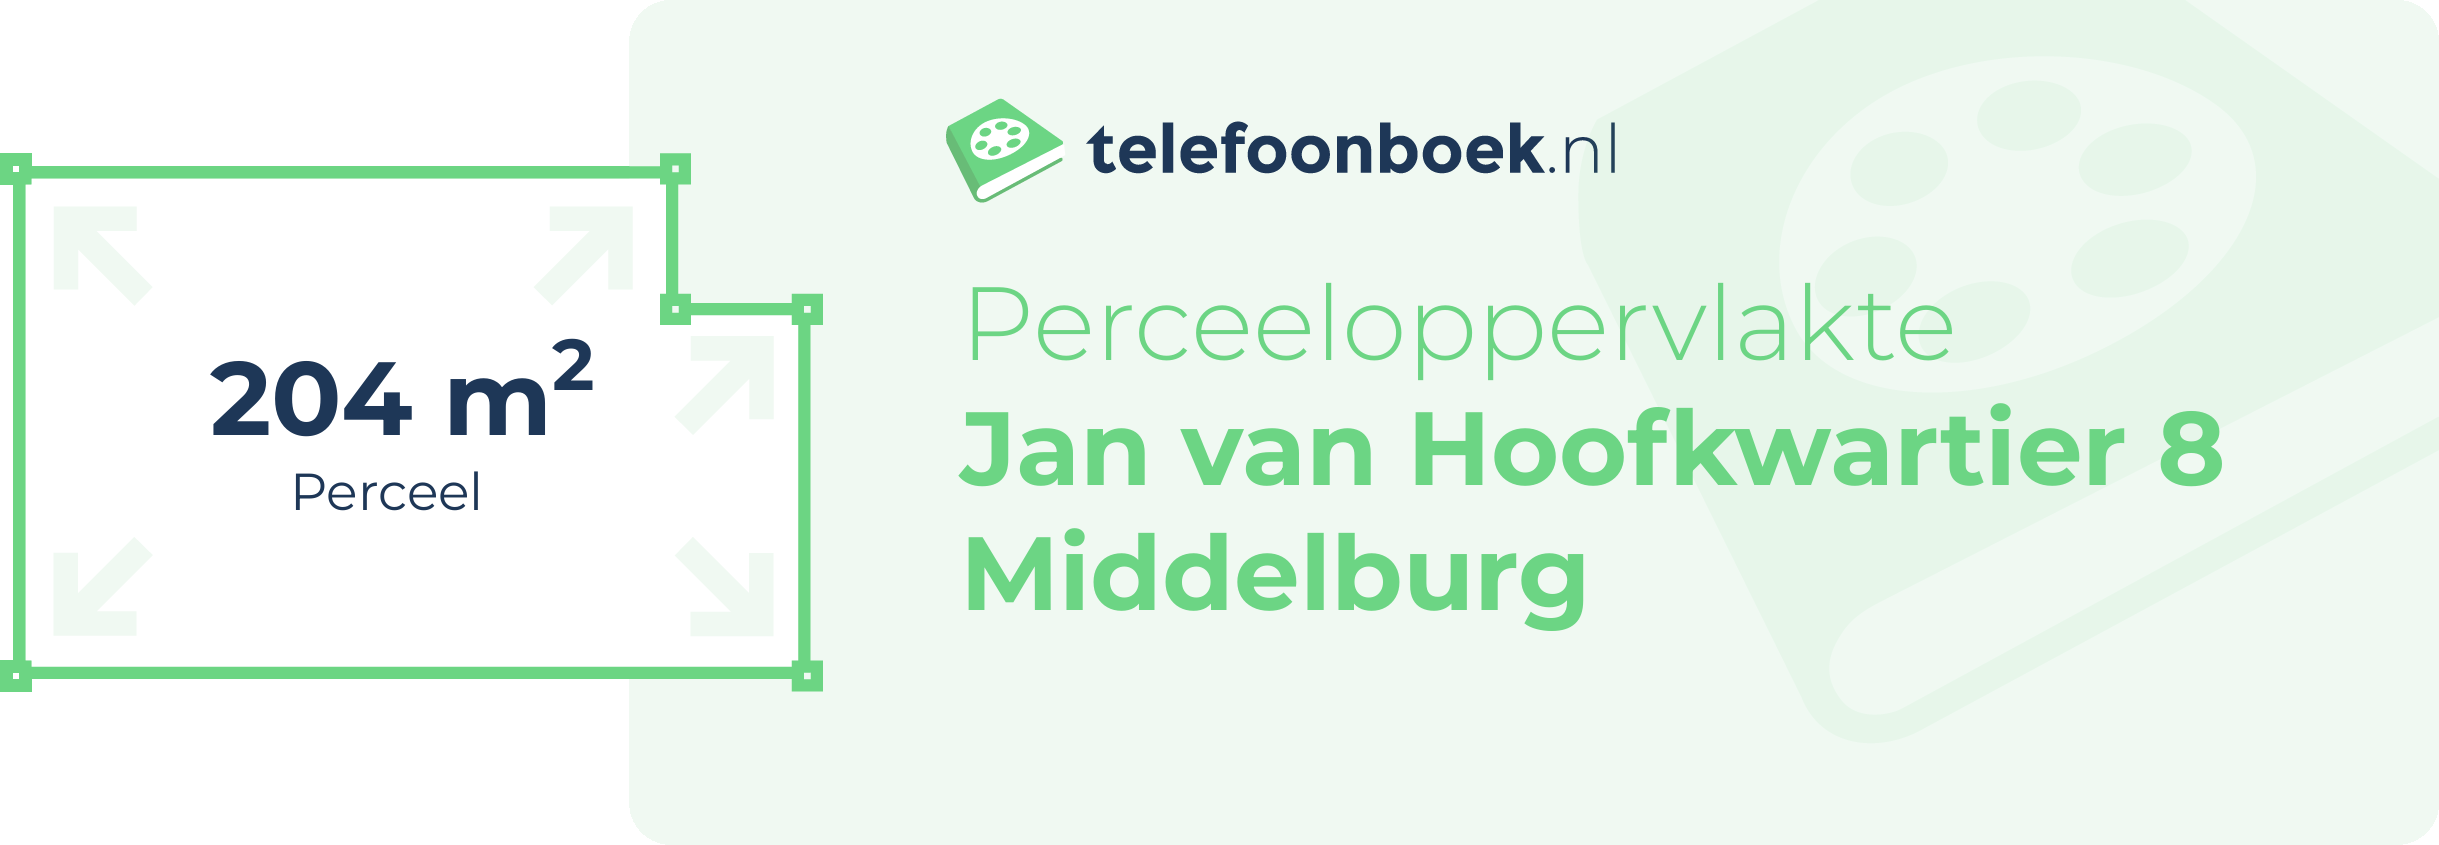 Perceeloppervlakte Jan Van Hoofkwartier 8 Middelburg